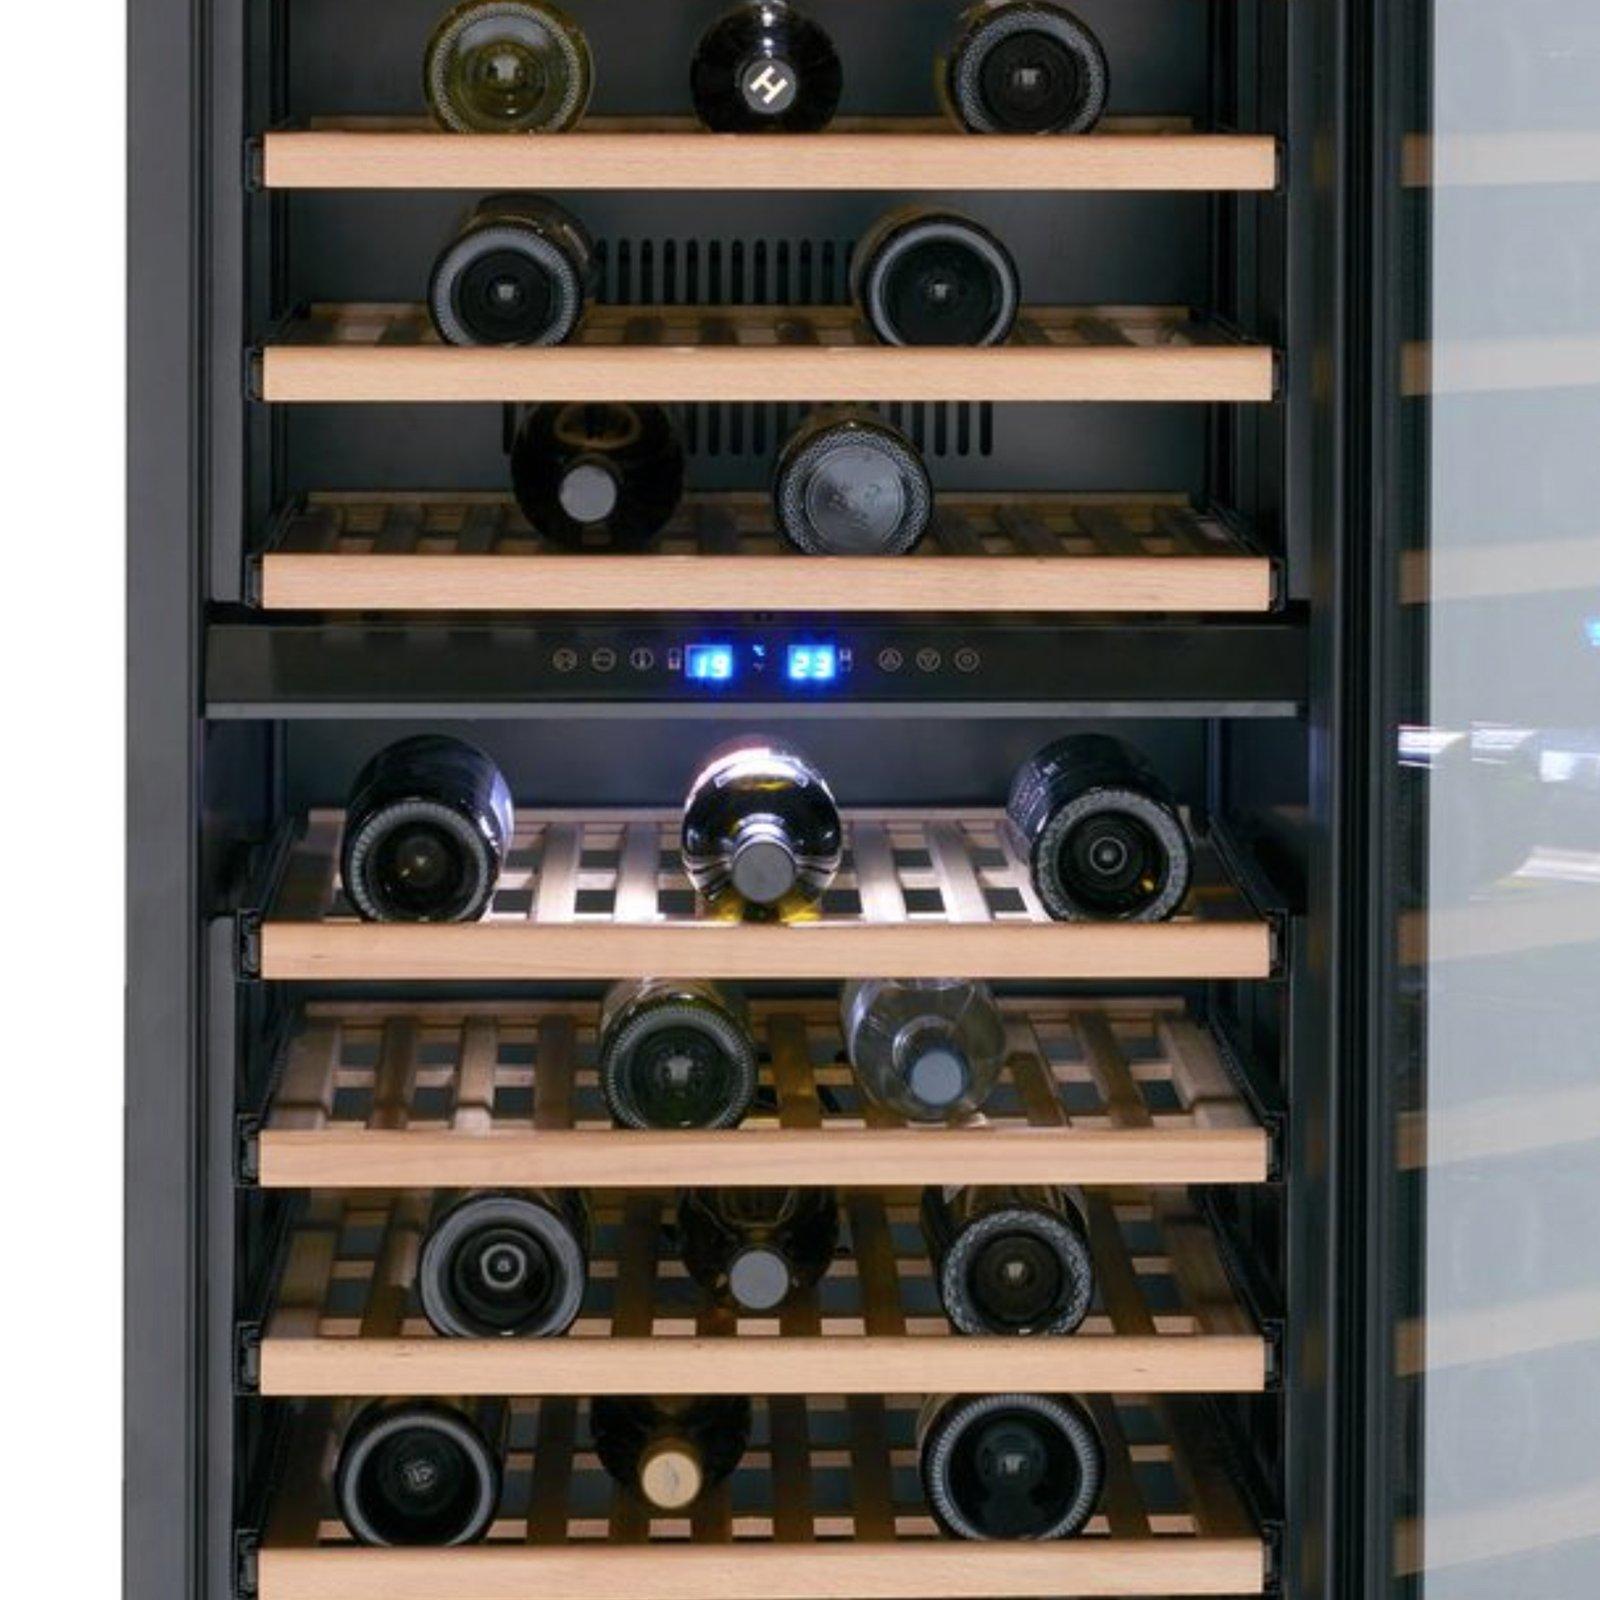 Avanti 154 Bottle DESIGNER Series Dual-Zone Wine Cooler - Stainless Steel with Black Cabinet / 154 Bottles